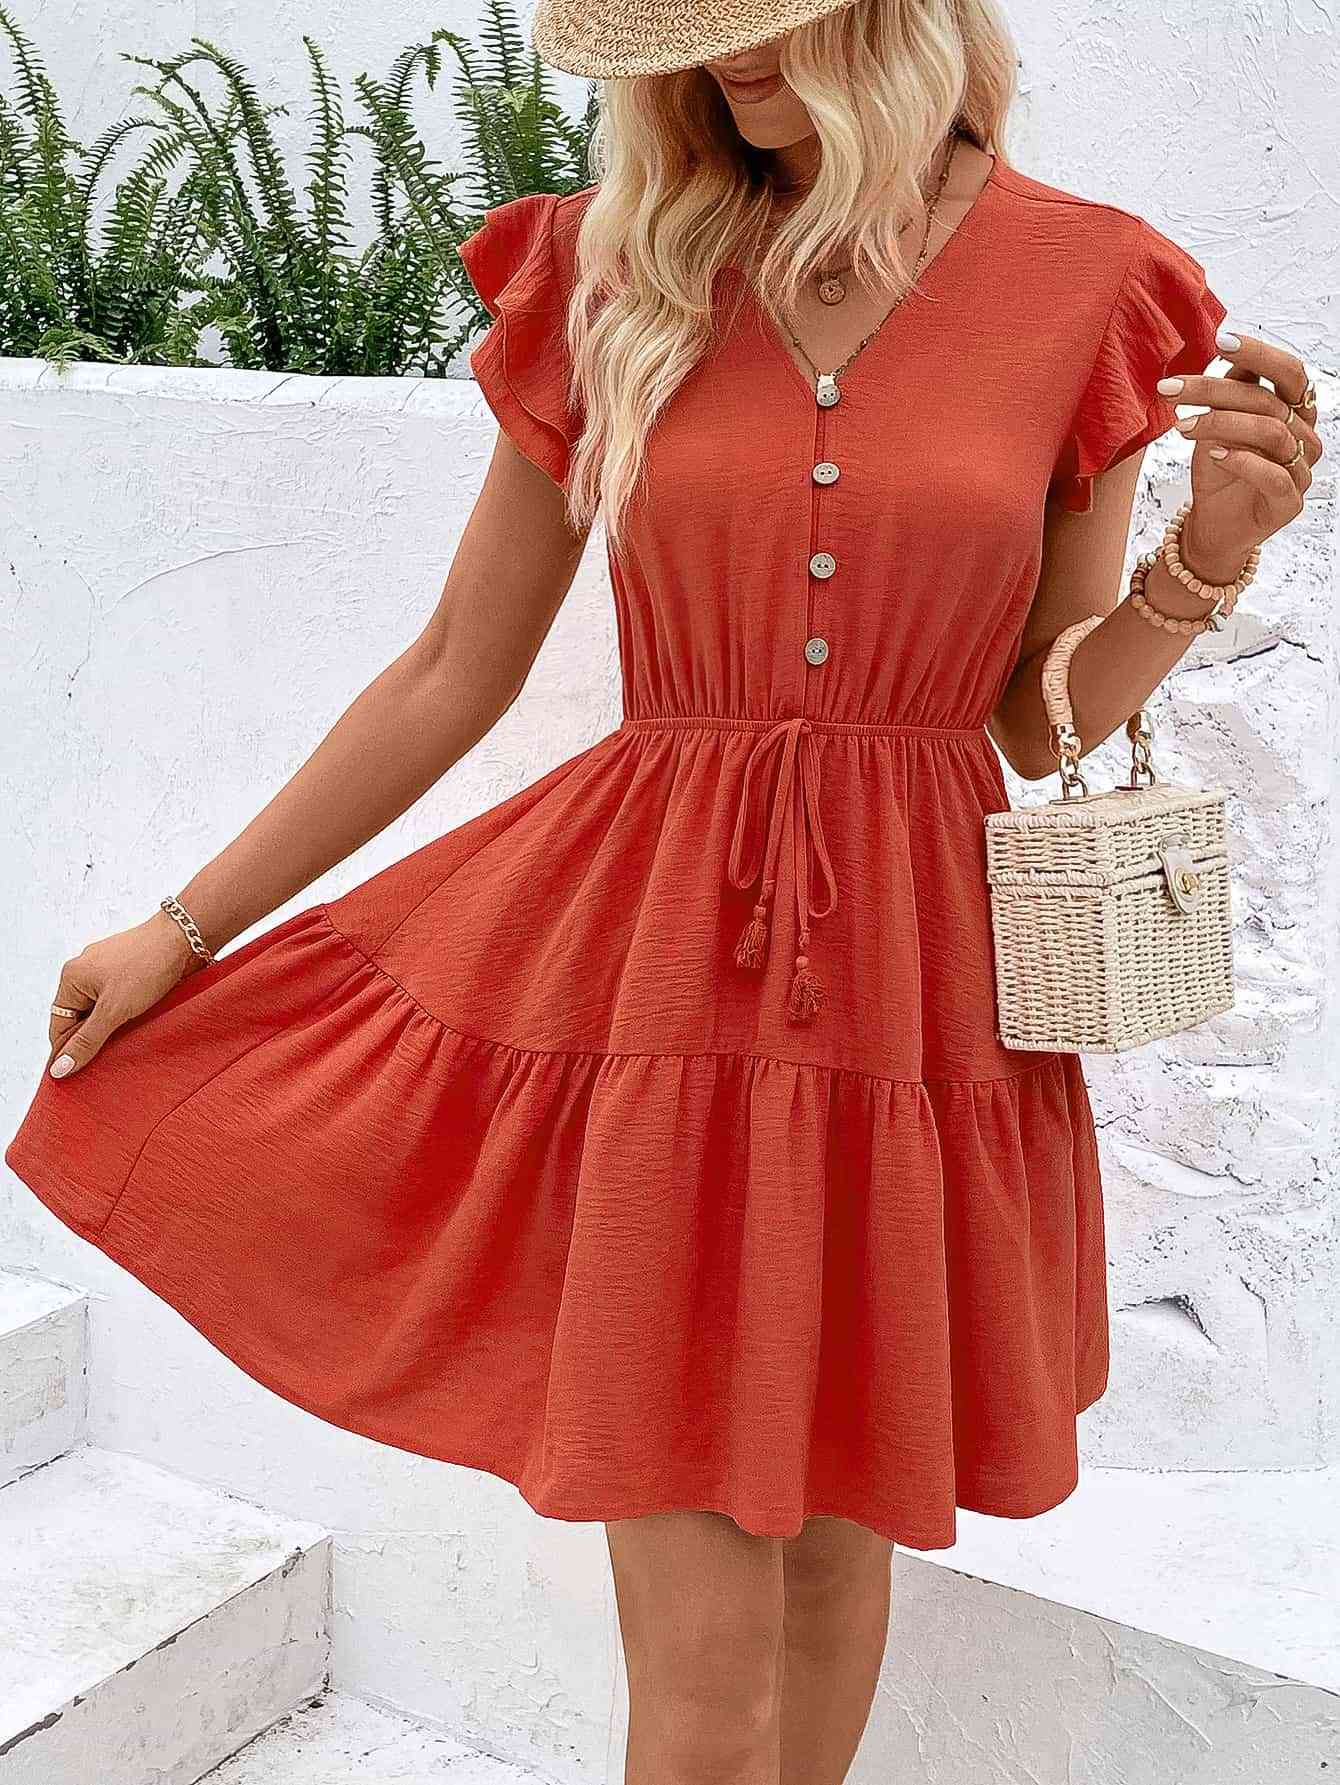 TEEK - Red Orange Tassel Tie V-Neck Dress DRESS TEEK Trend   